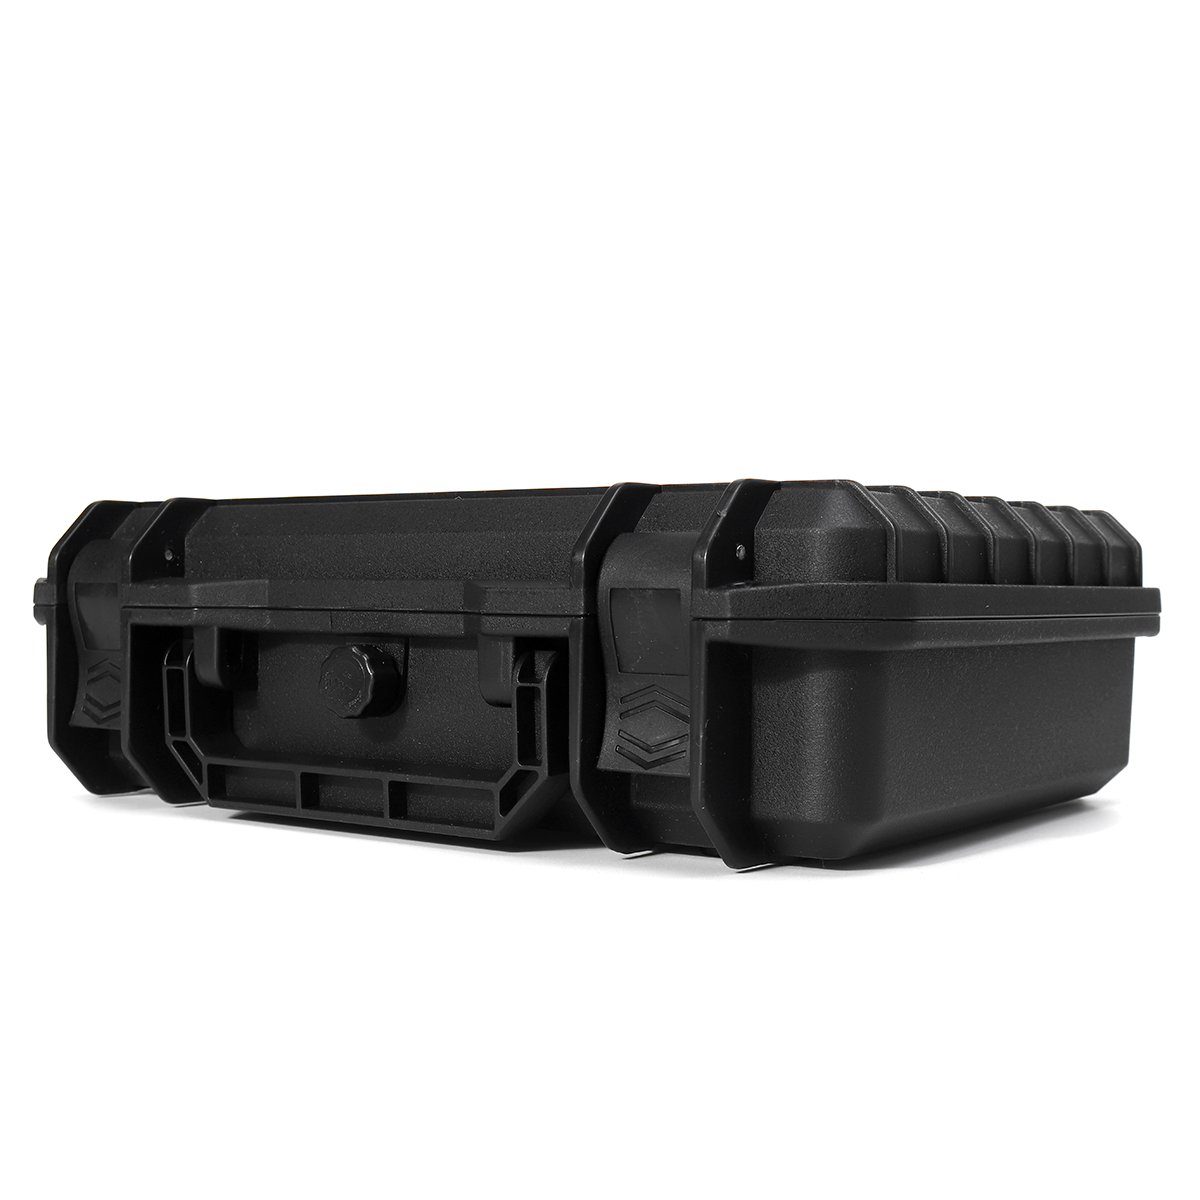 Waterproof-Hard-Carry-Tool-Case-Bag-Storage-Box-Camera-Photography-Sponge-Storage-Kit-1861191-3